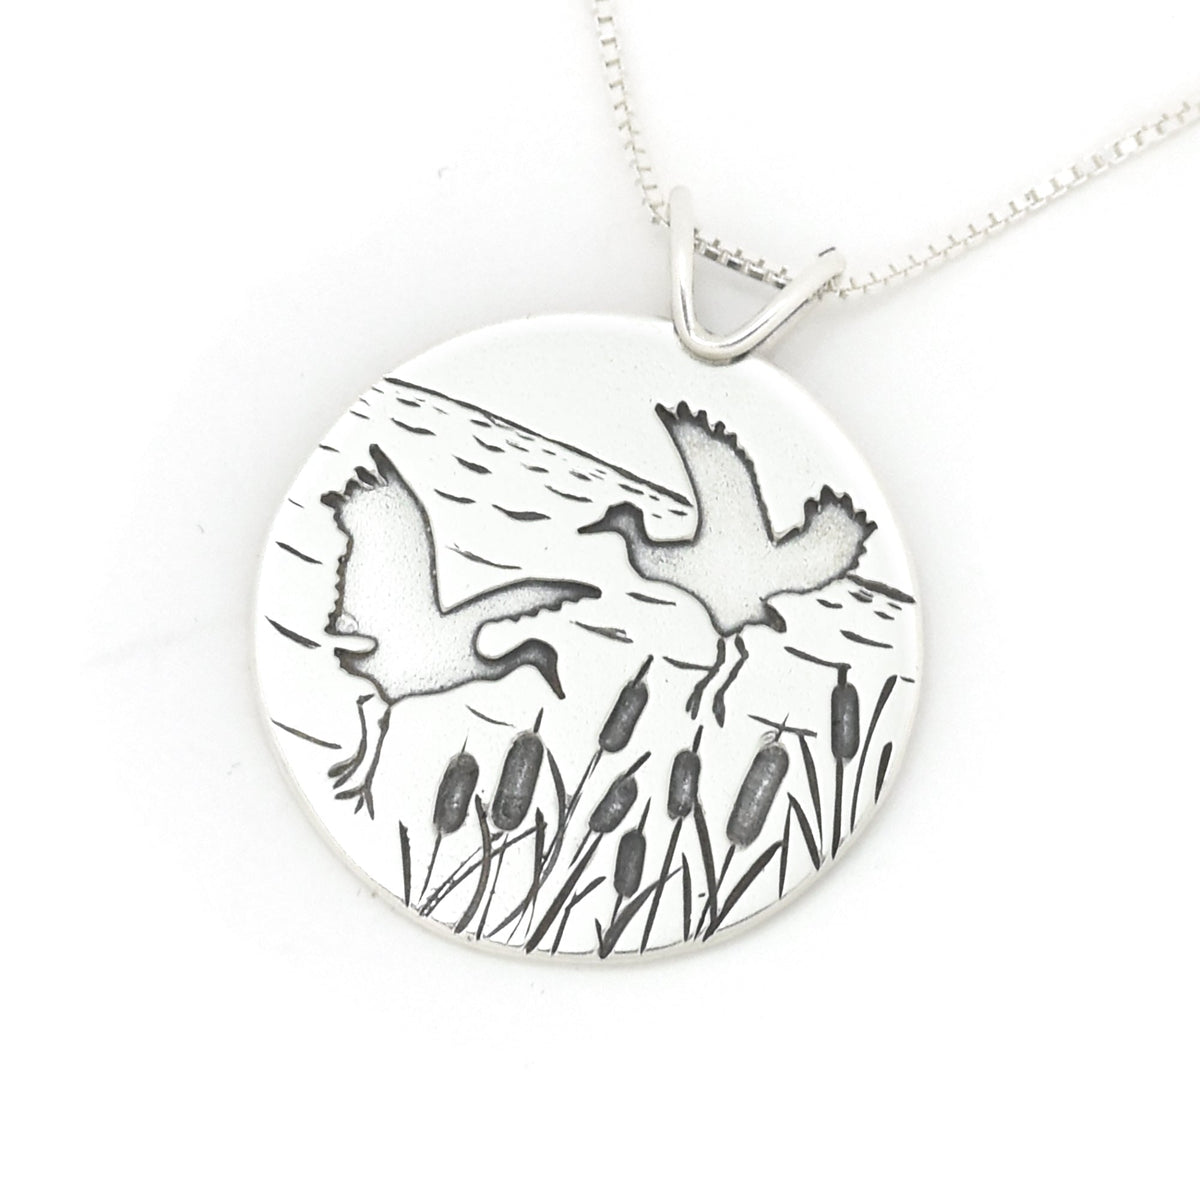 Teal Lake Crane Couple Pendant - Silver Pendant   6883 - handmade by Beth Millner Jewelry